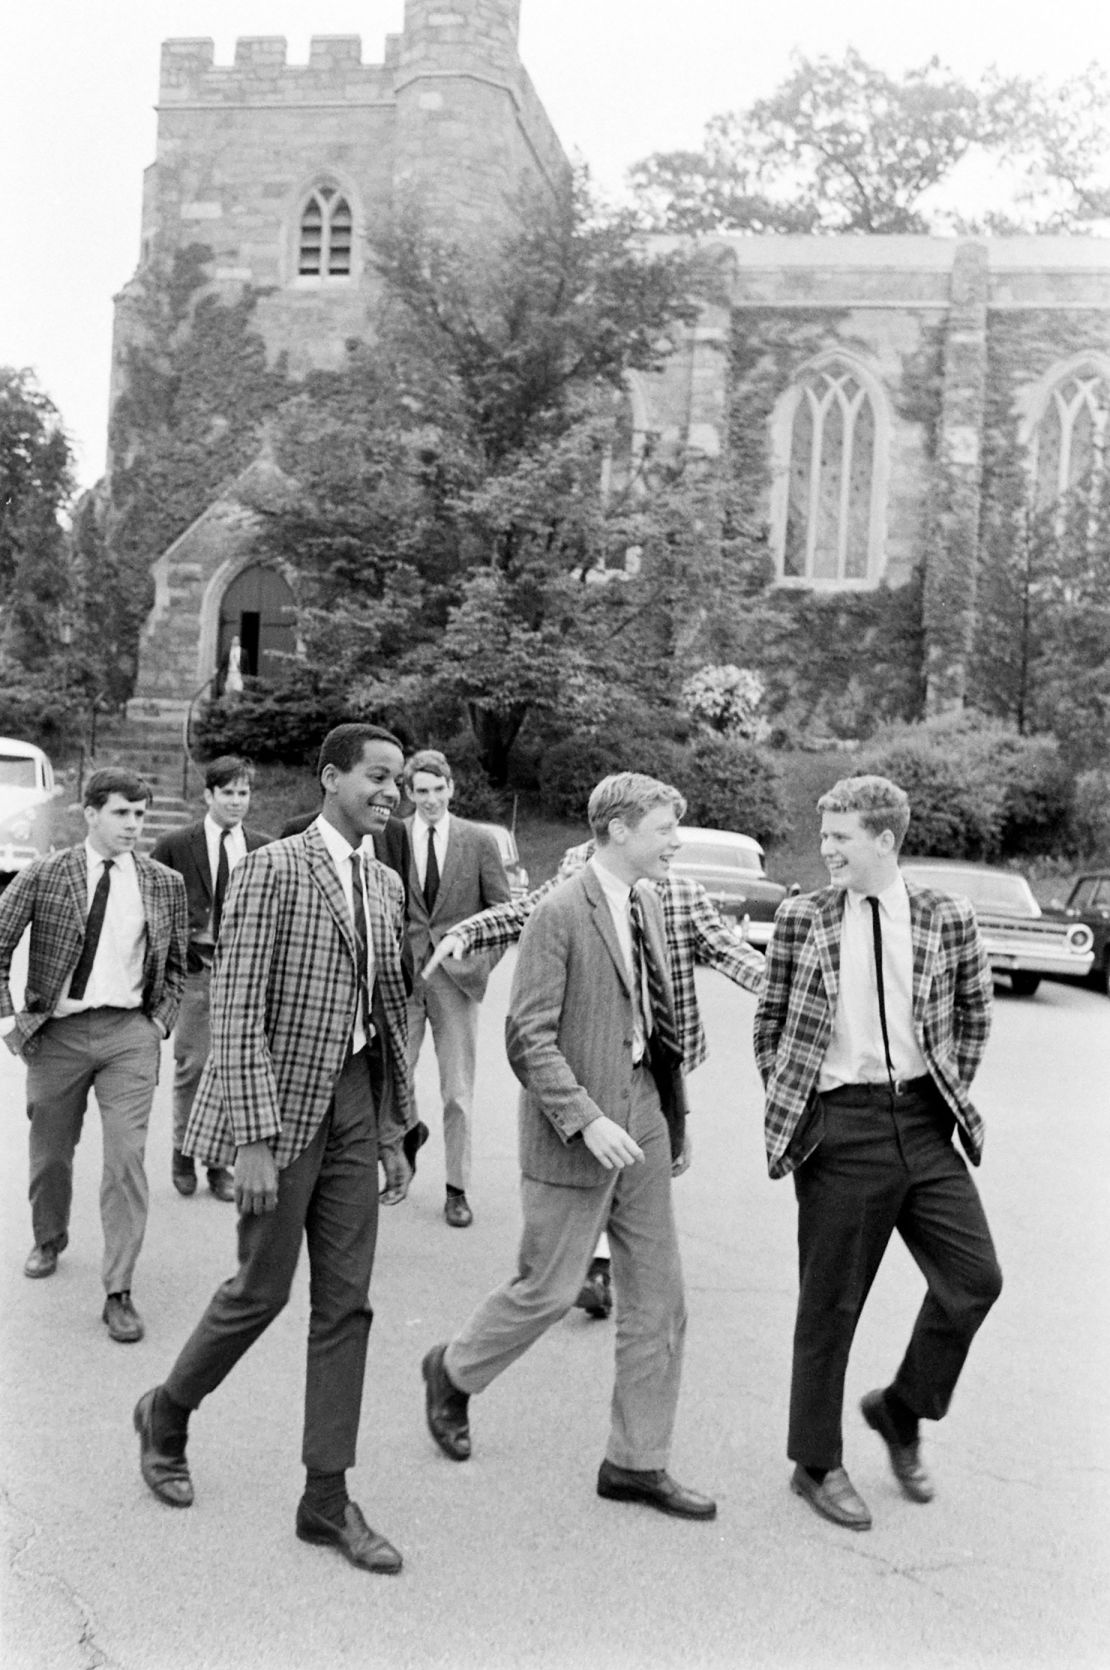 Students in madras blazers walk around the Milton Academy campus in Milton, Massachusetts in 1966.